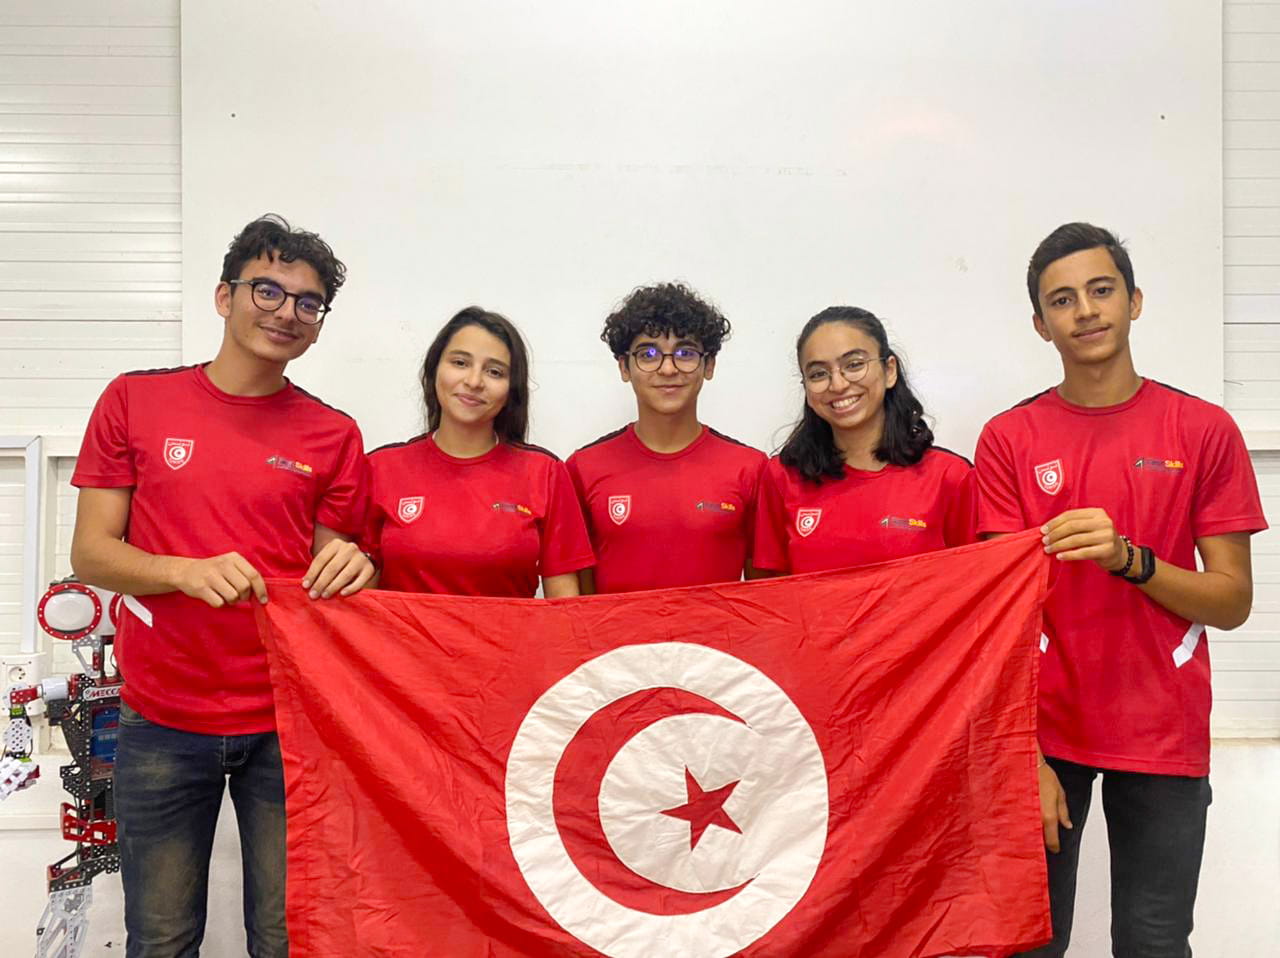 Team Tunisia group photo